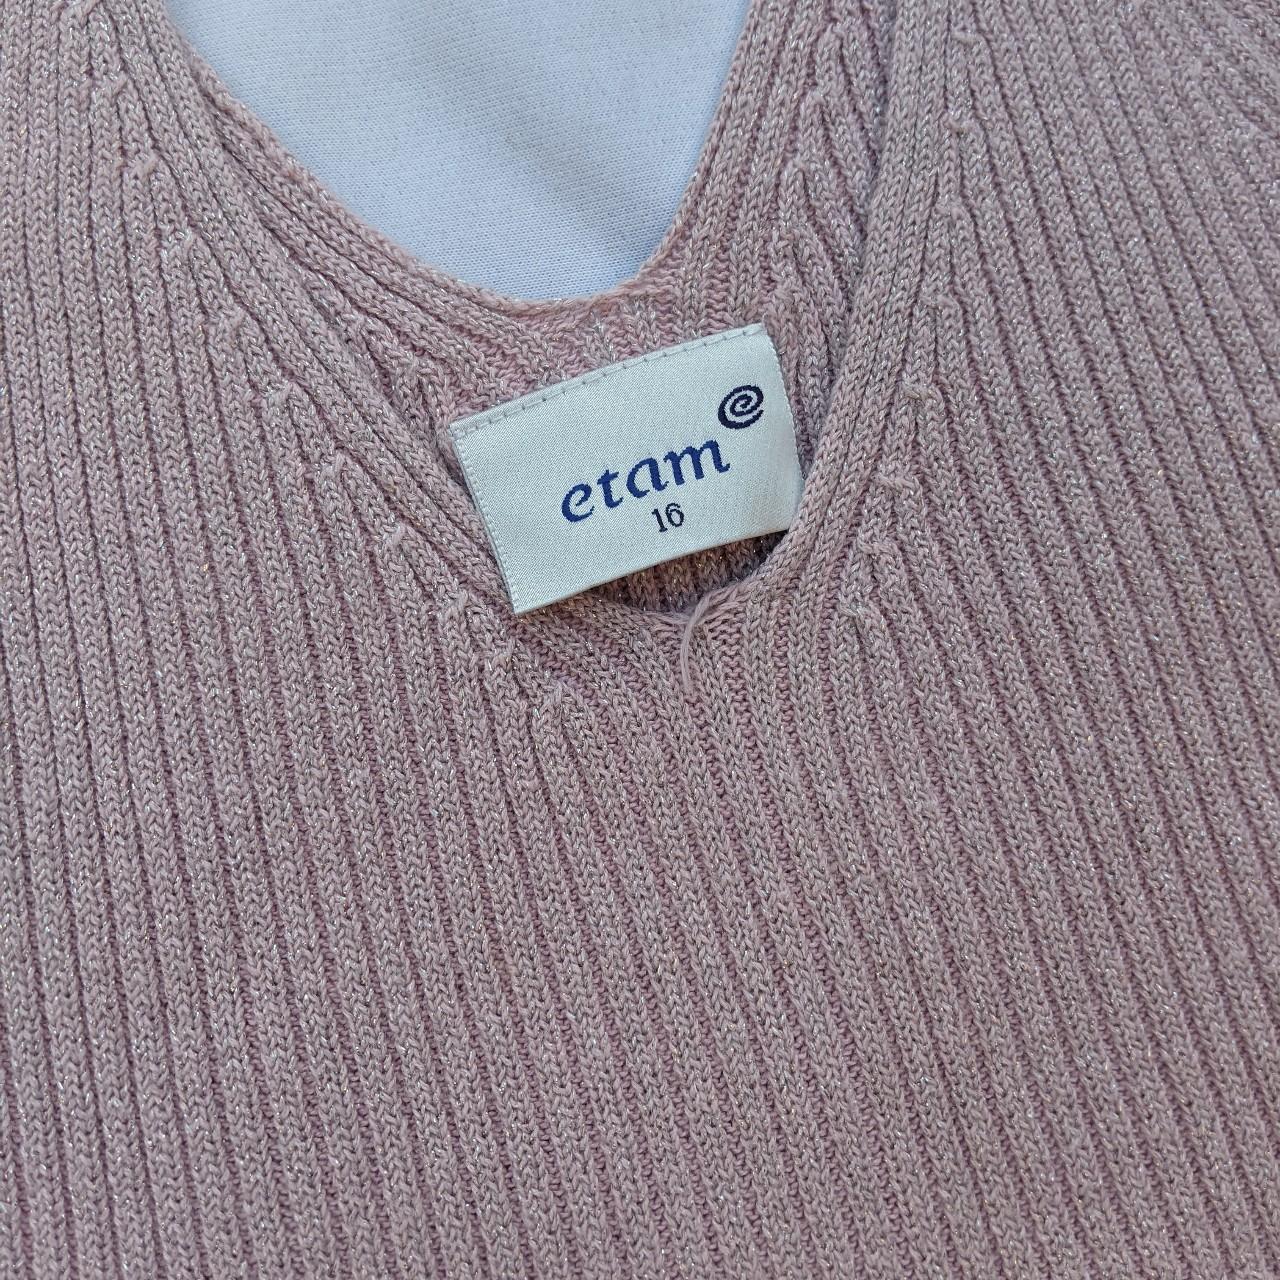 Etam Women's Pink and Silver Vest | Depop